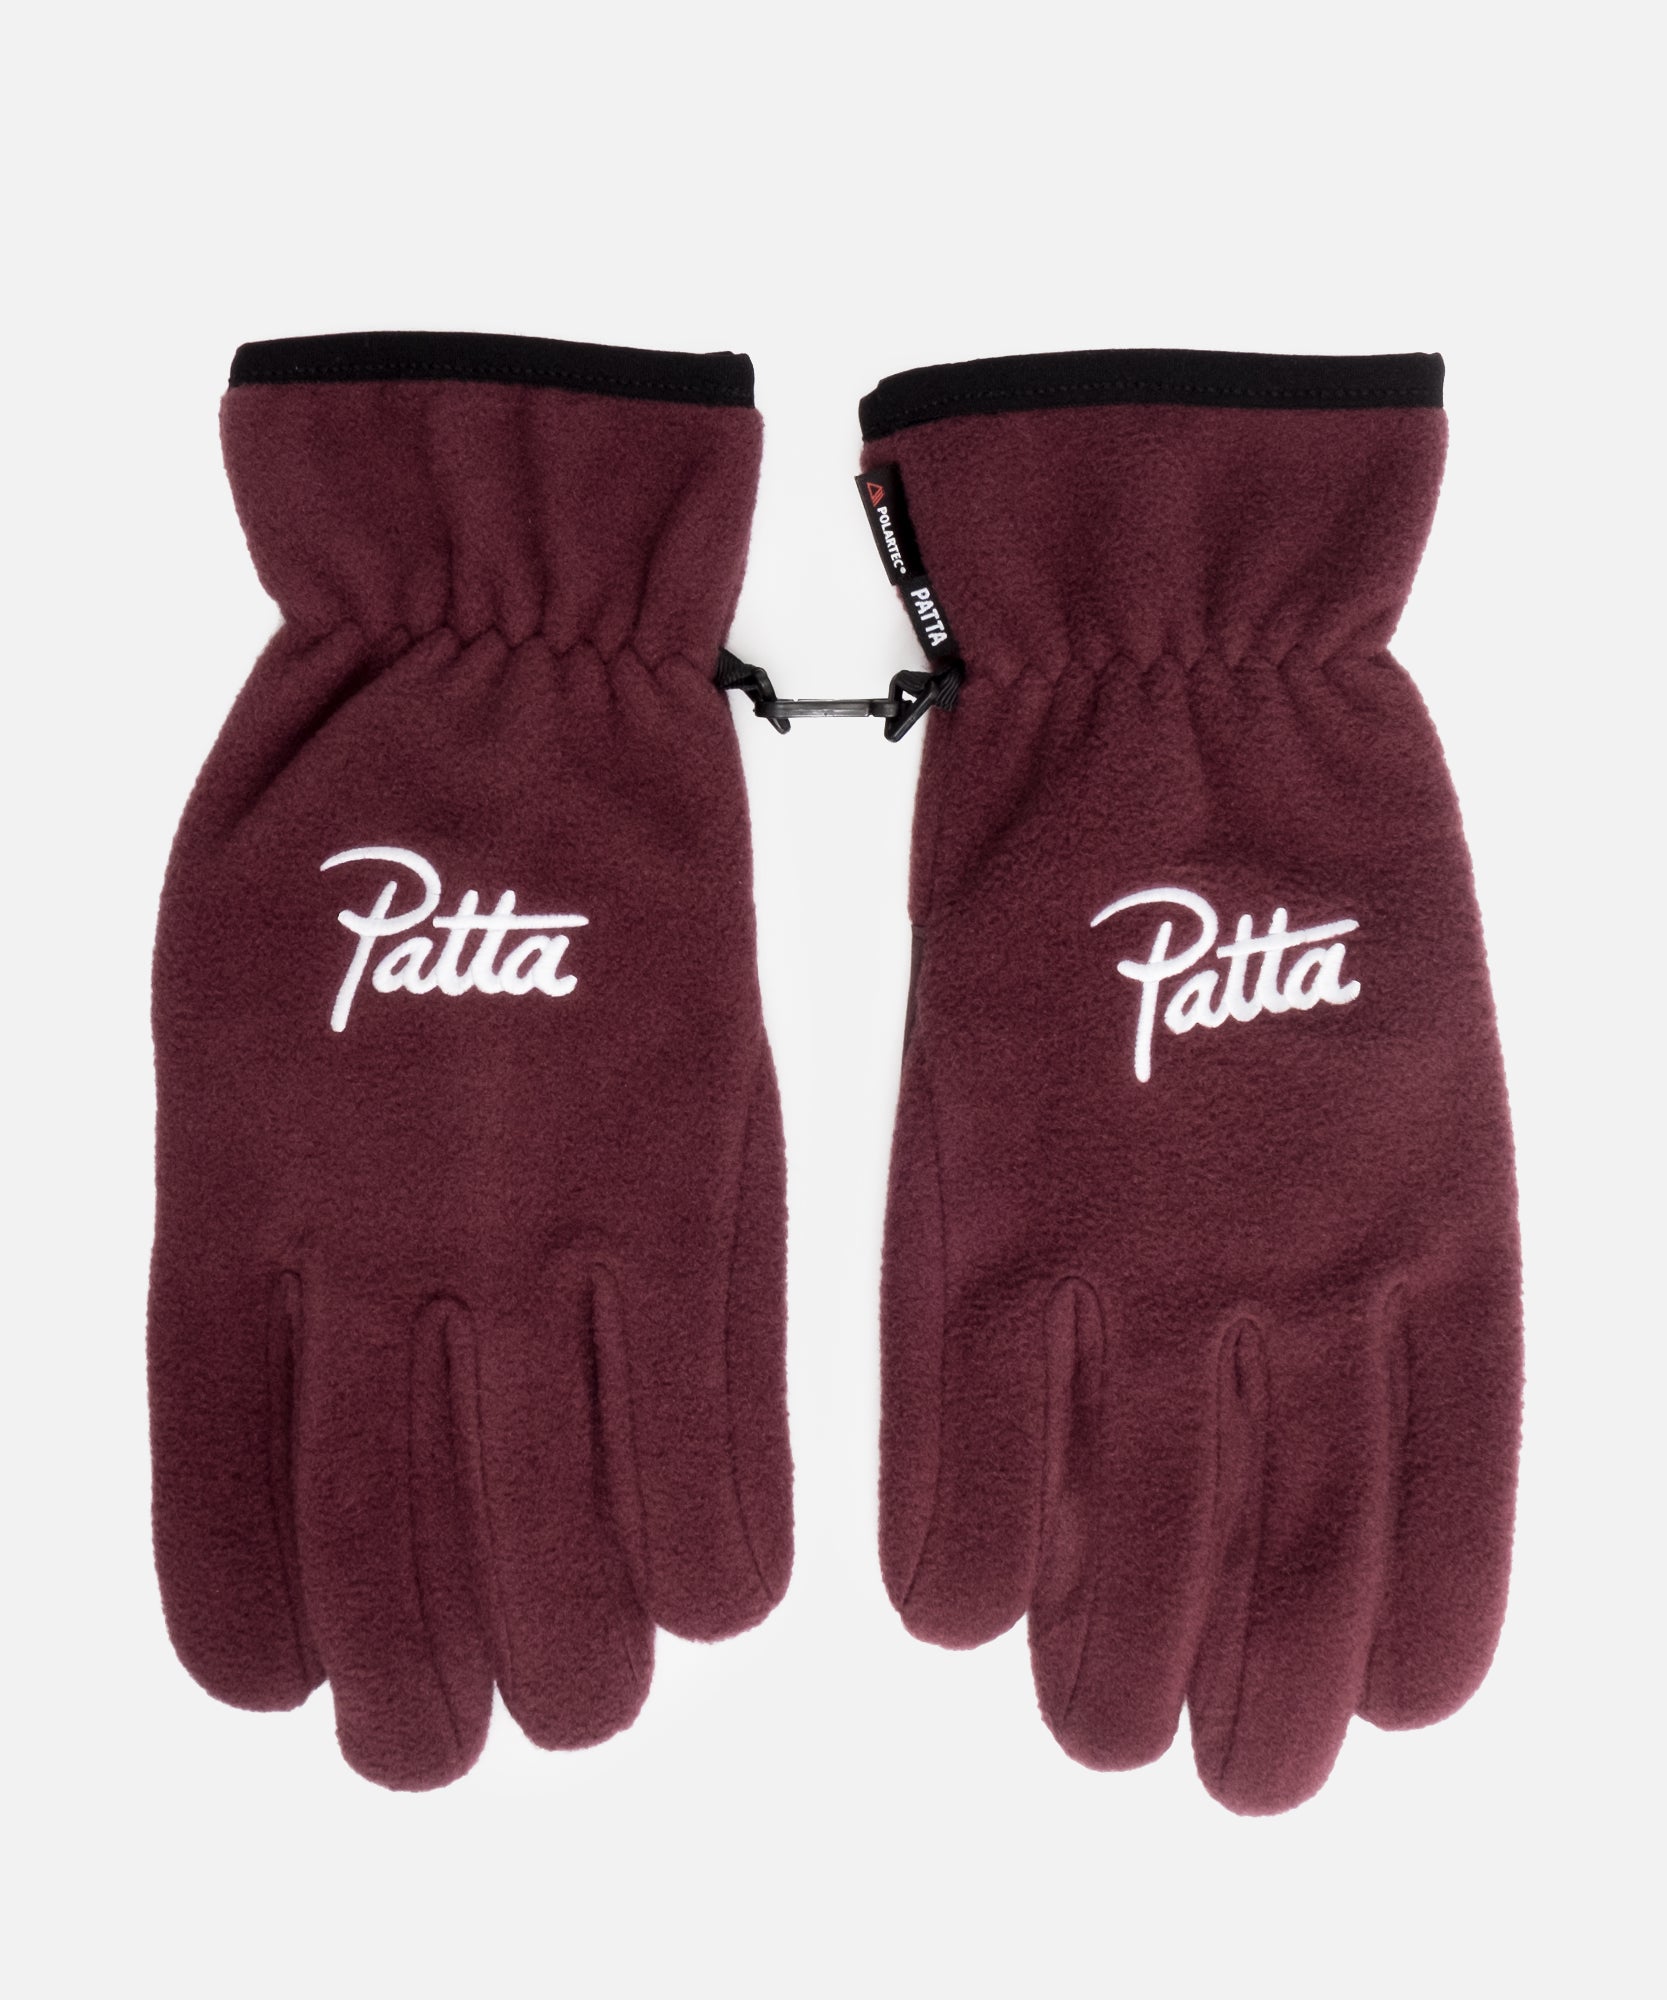 Patta Polartec Gloves (Port Royal/Eggplant)